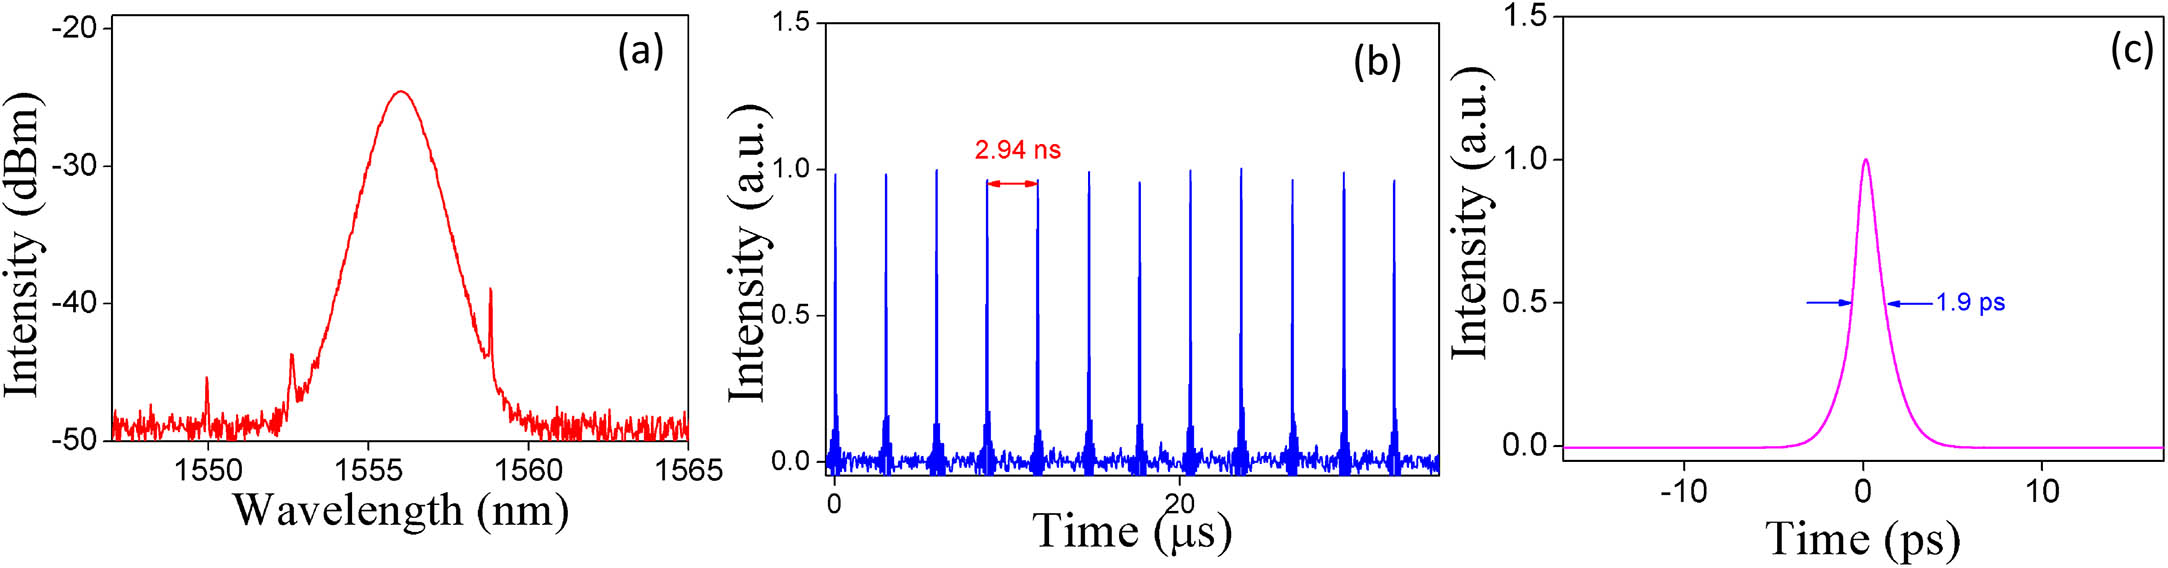 Single-wavelength harmonic mode-locked operation at the repetition rate of 340 MHz. (a) Mode-locked spectrum; (b) corresponding pulse-train; (c) corresponding autocorrelation trace.